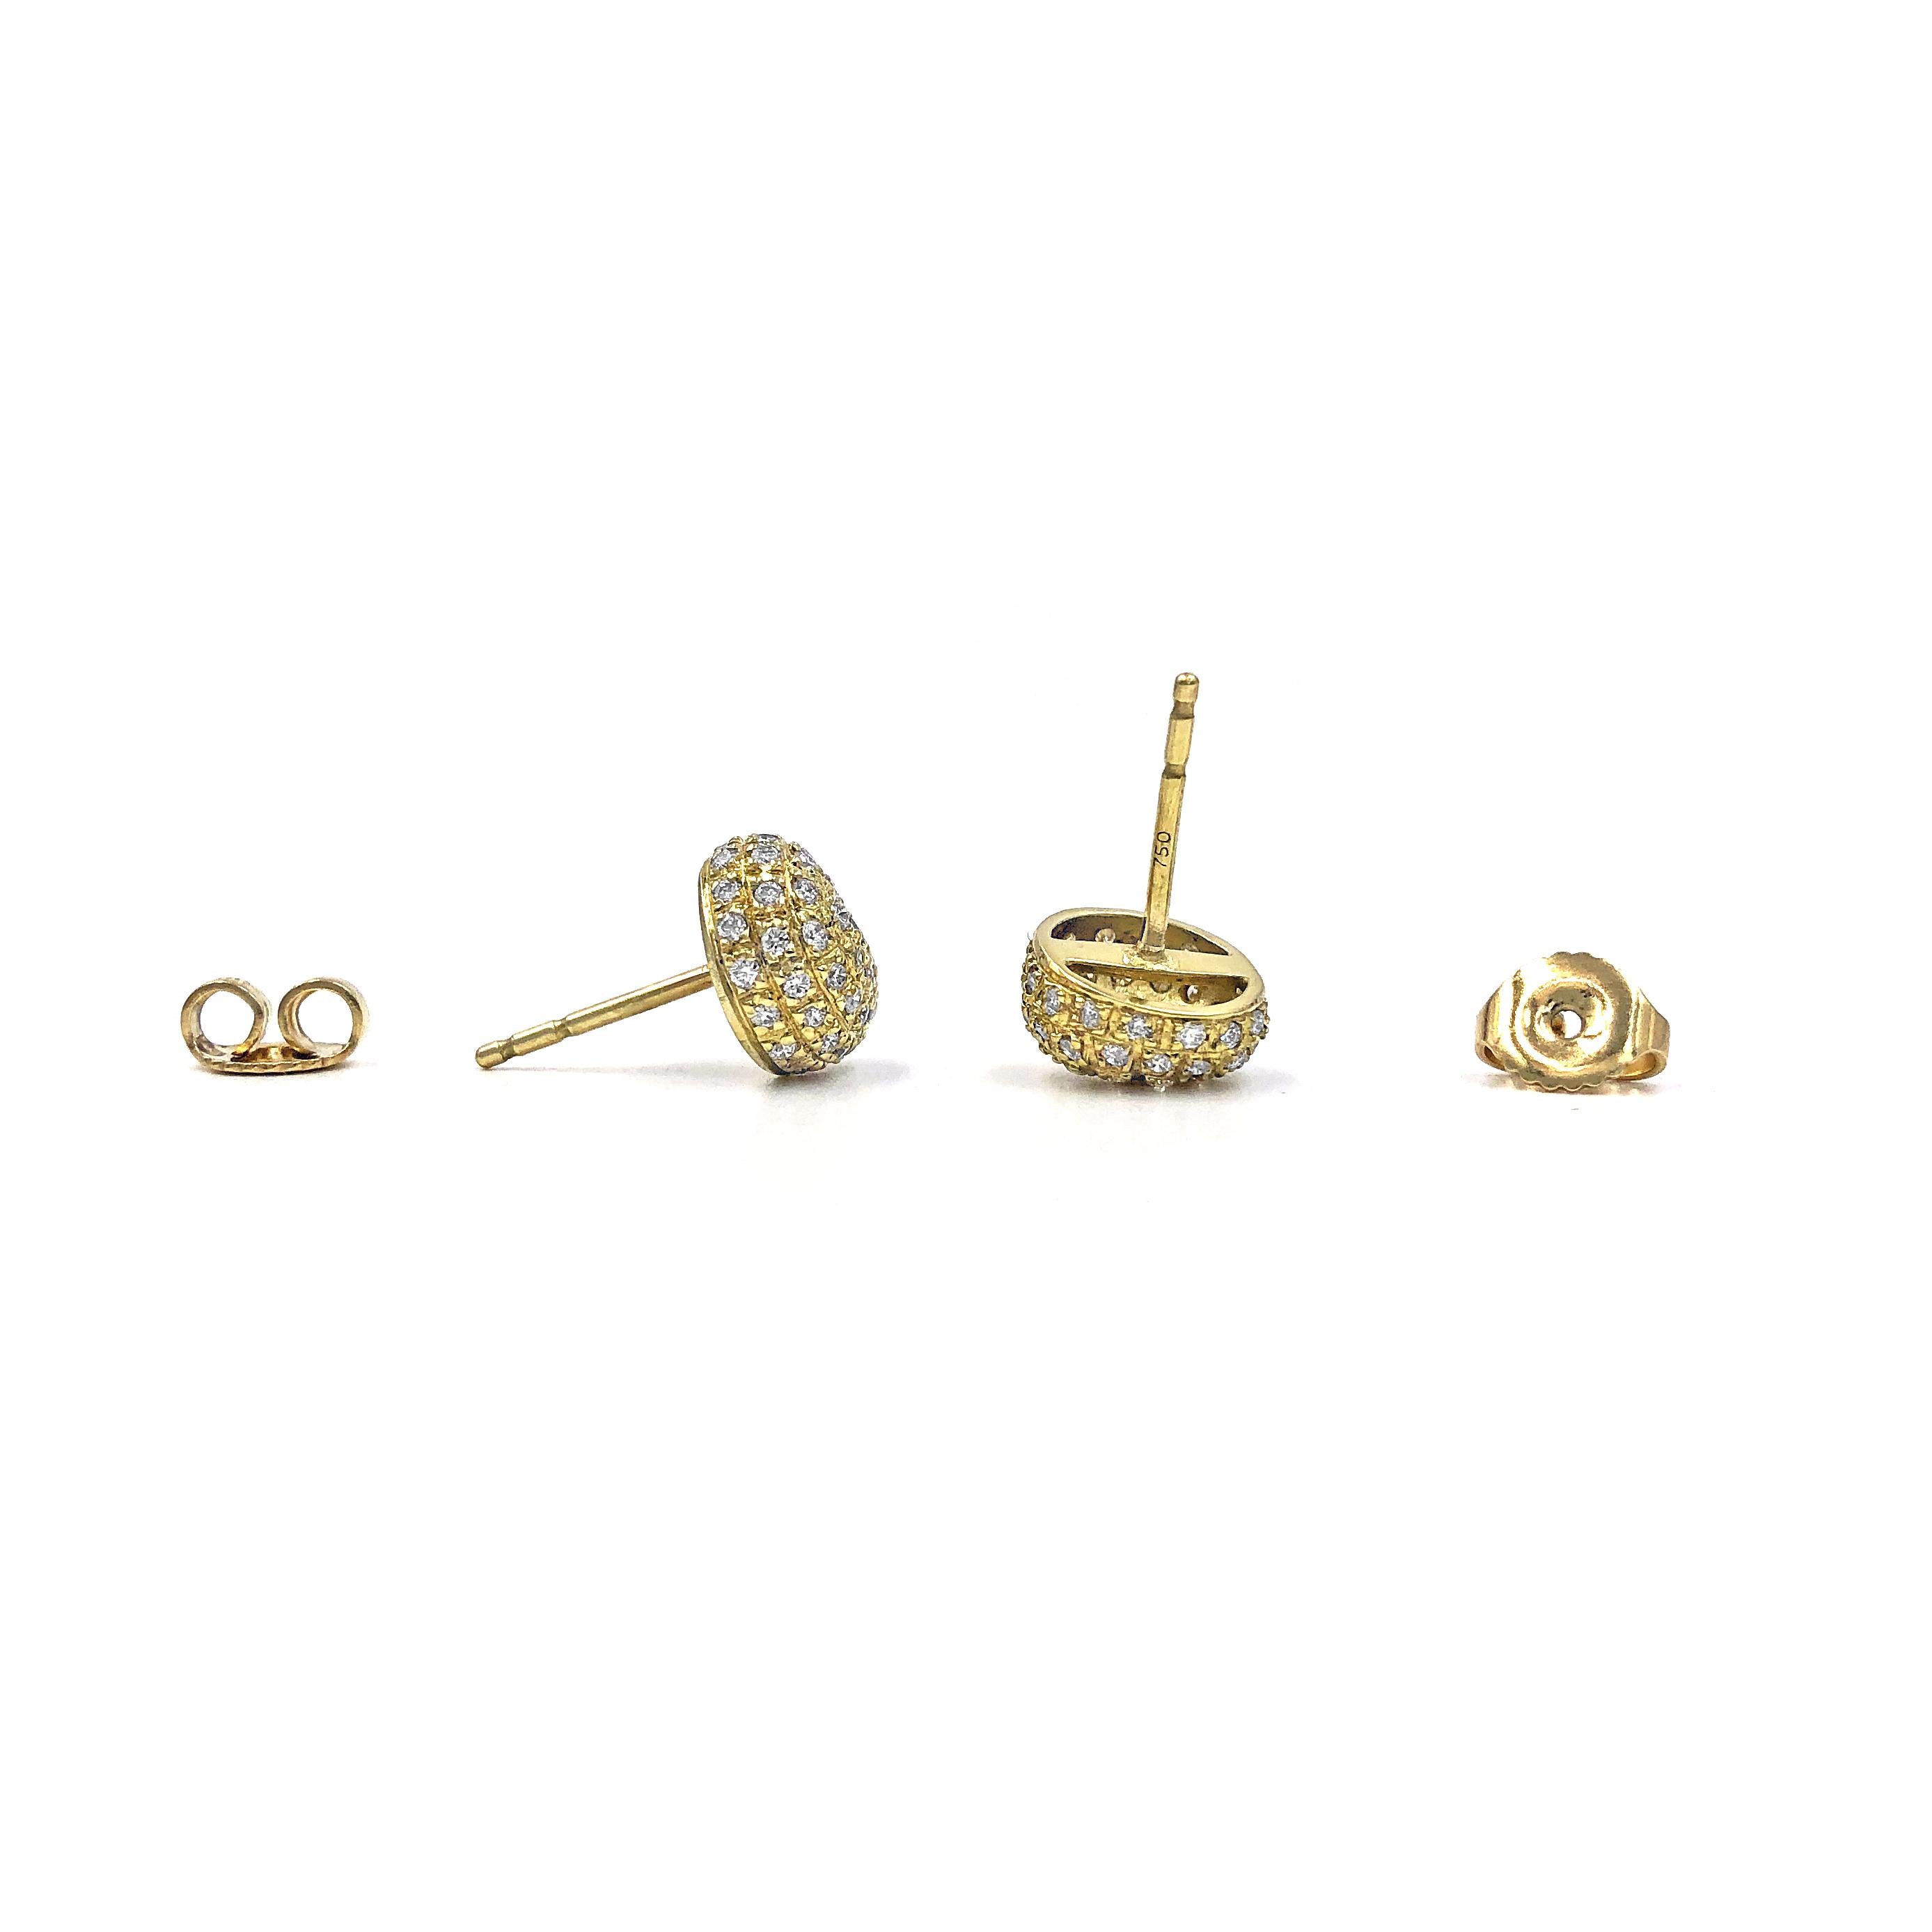 Modern Contemporary Round Brilliant White Diamond Gold Stud Earrings, John Iversen 2019